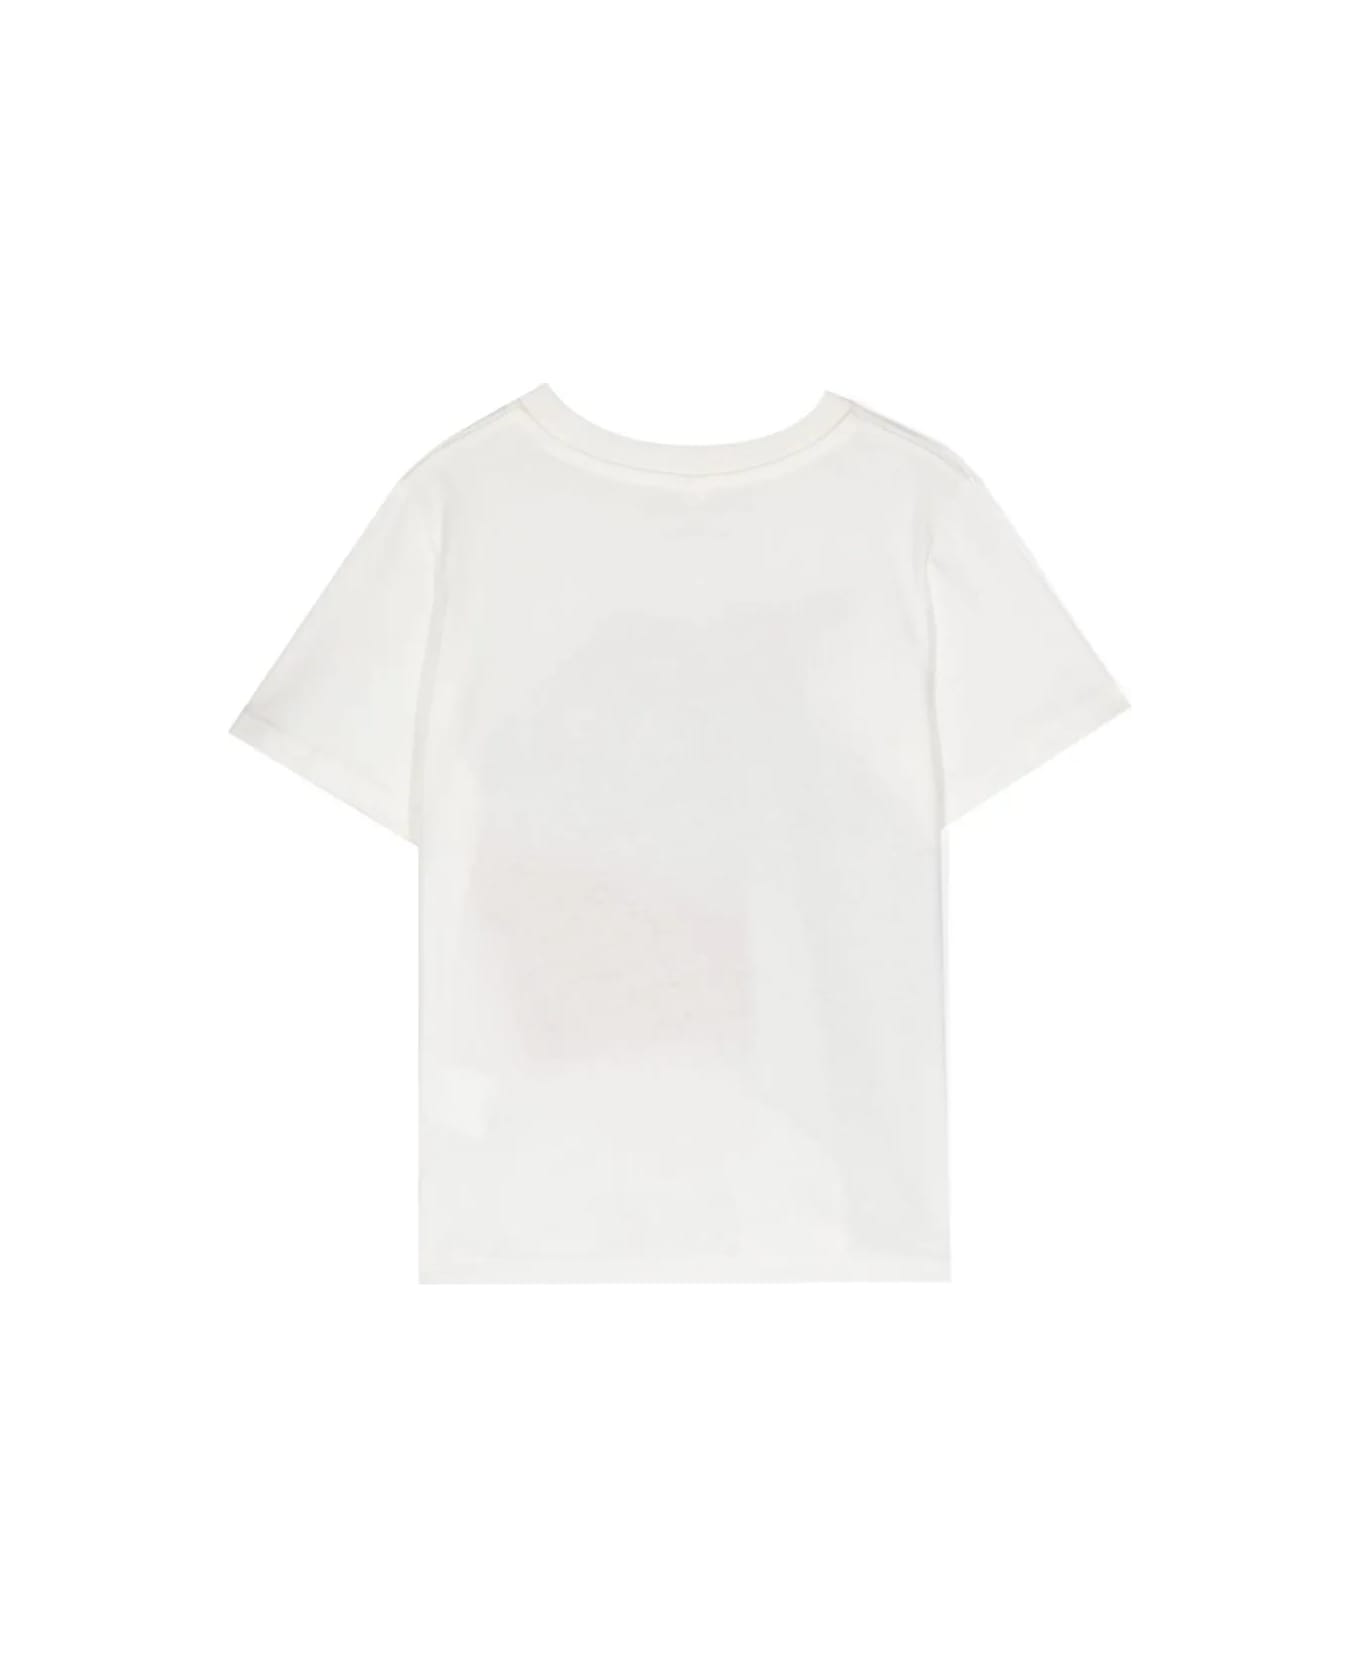 Stella McCartney Kids Shark Motif T-shirt In Ivory - White